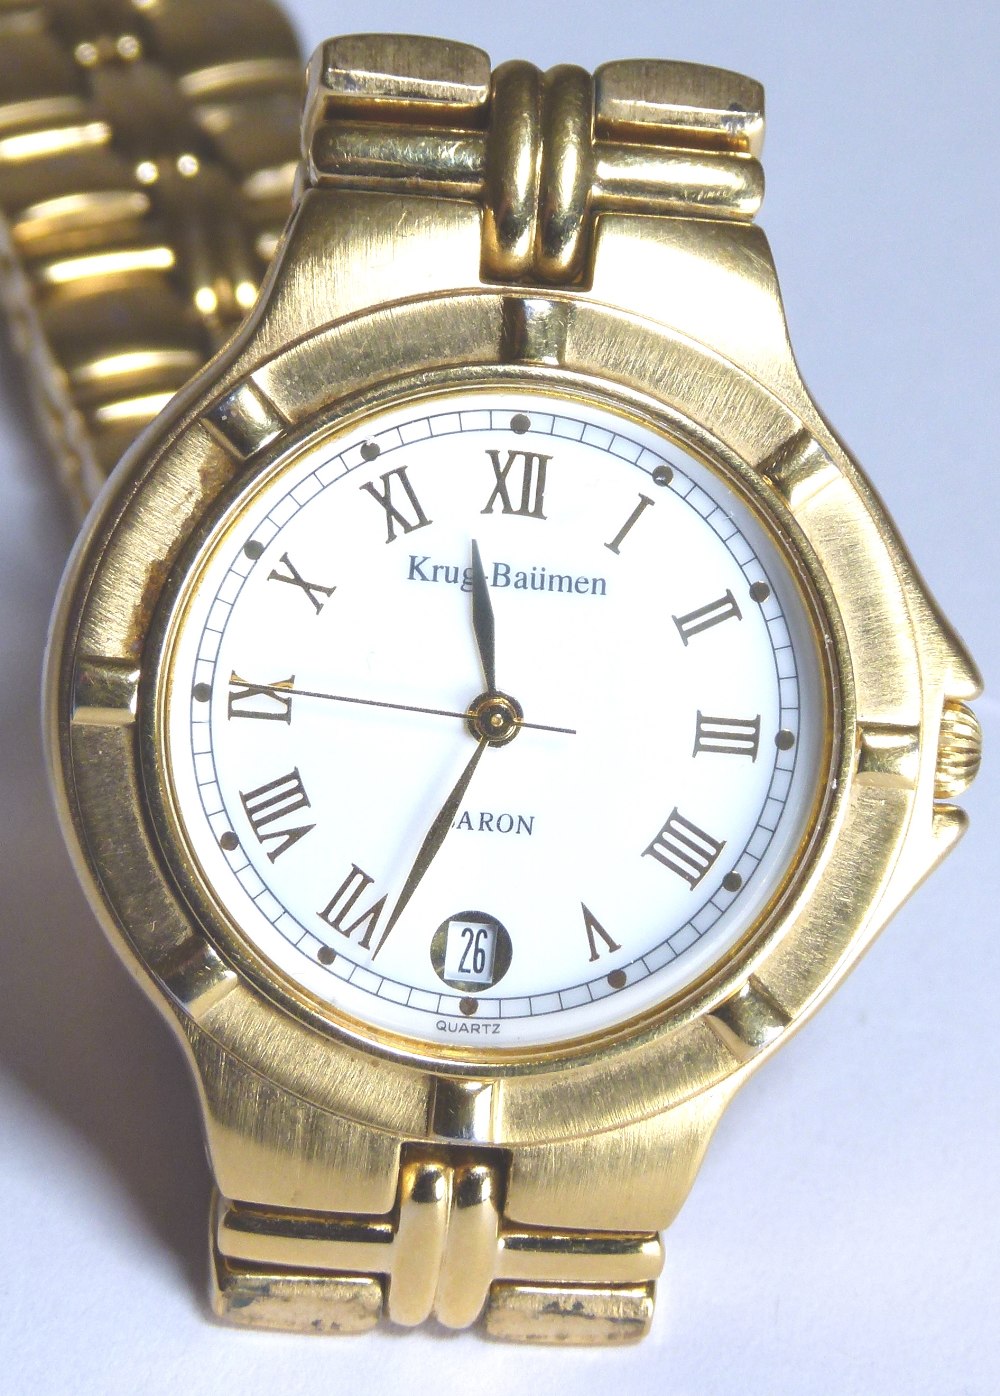 Krug Bauman 18ct gold plated wristwatch on a gold plated bracelet